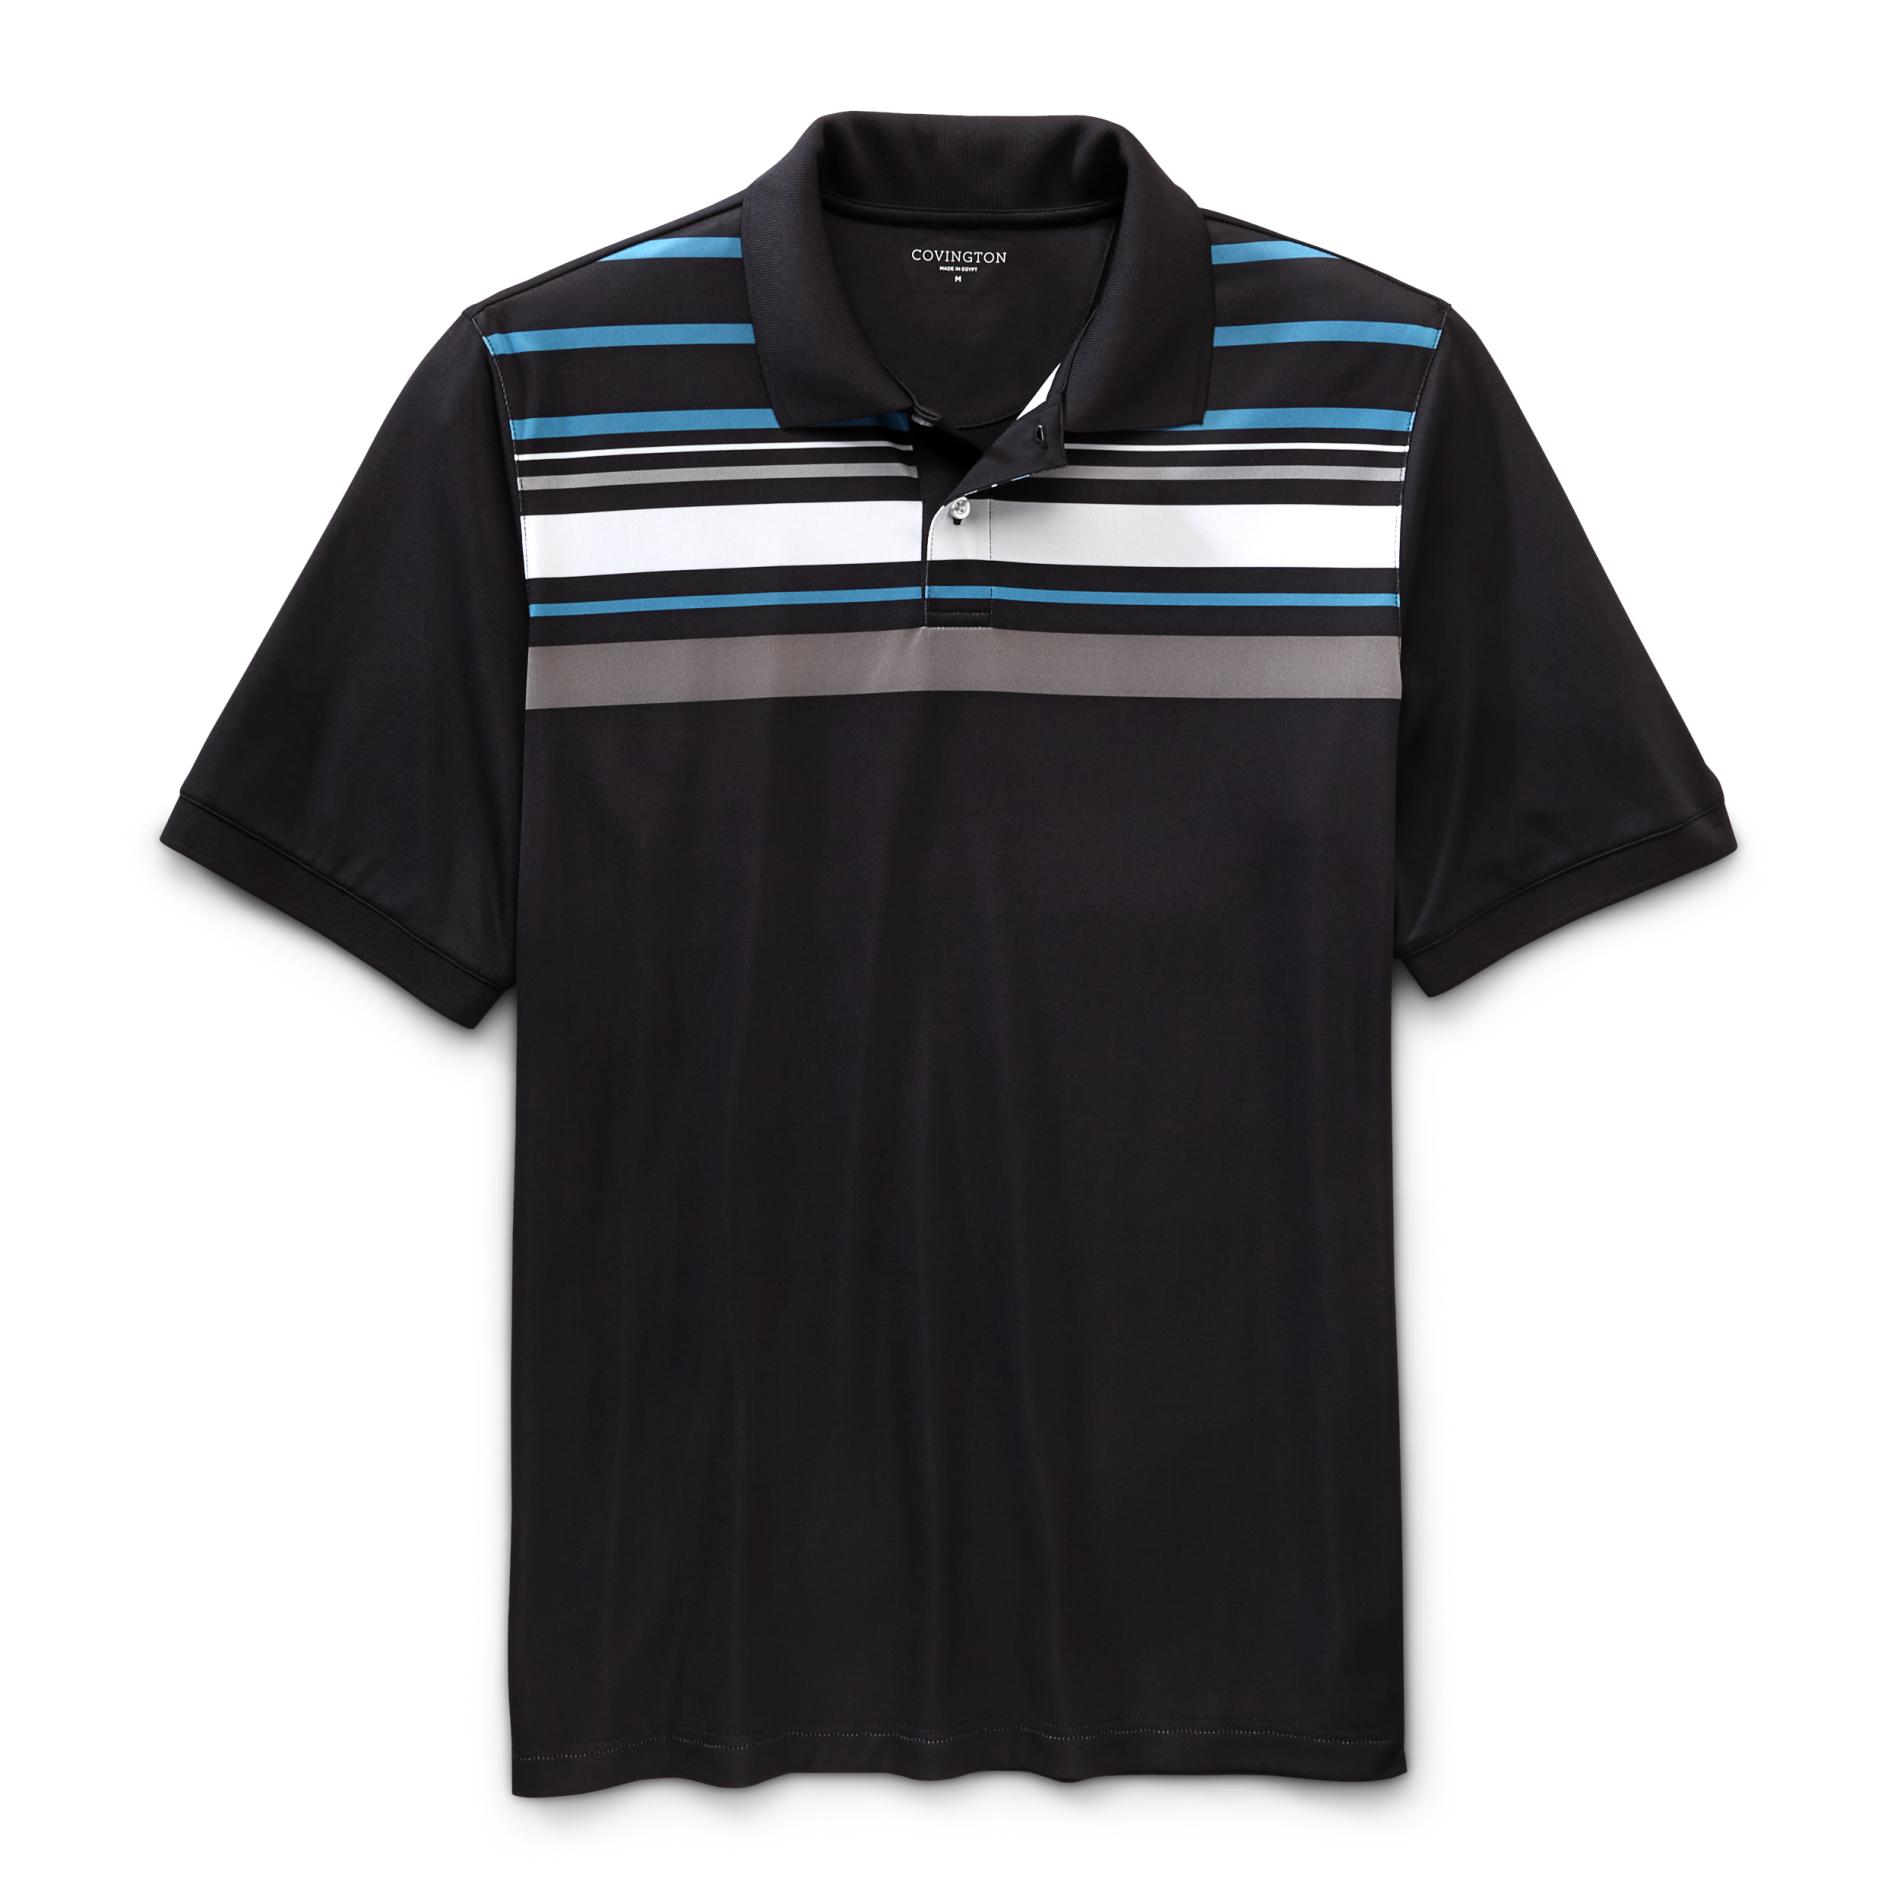 Covington Men's Polo Shirt - Striped